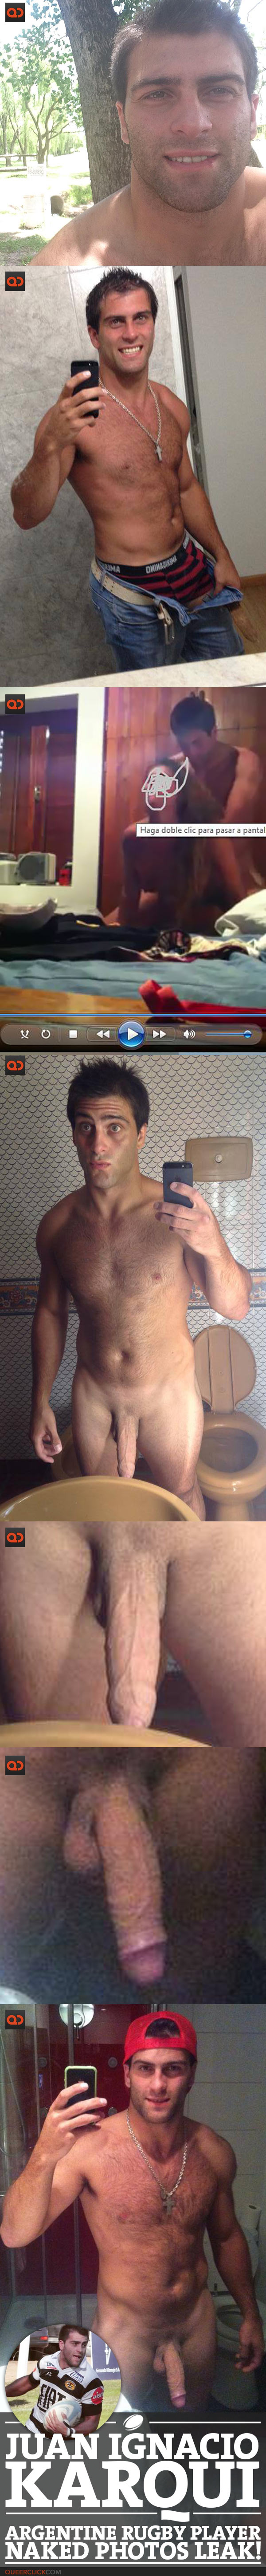 Juan Ignacio Karqui, Argentine Rugby Player, Naked Photos Leak!